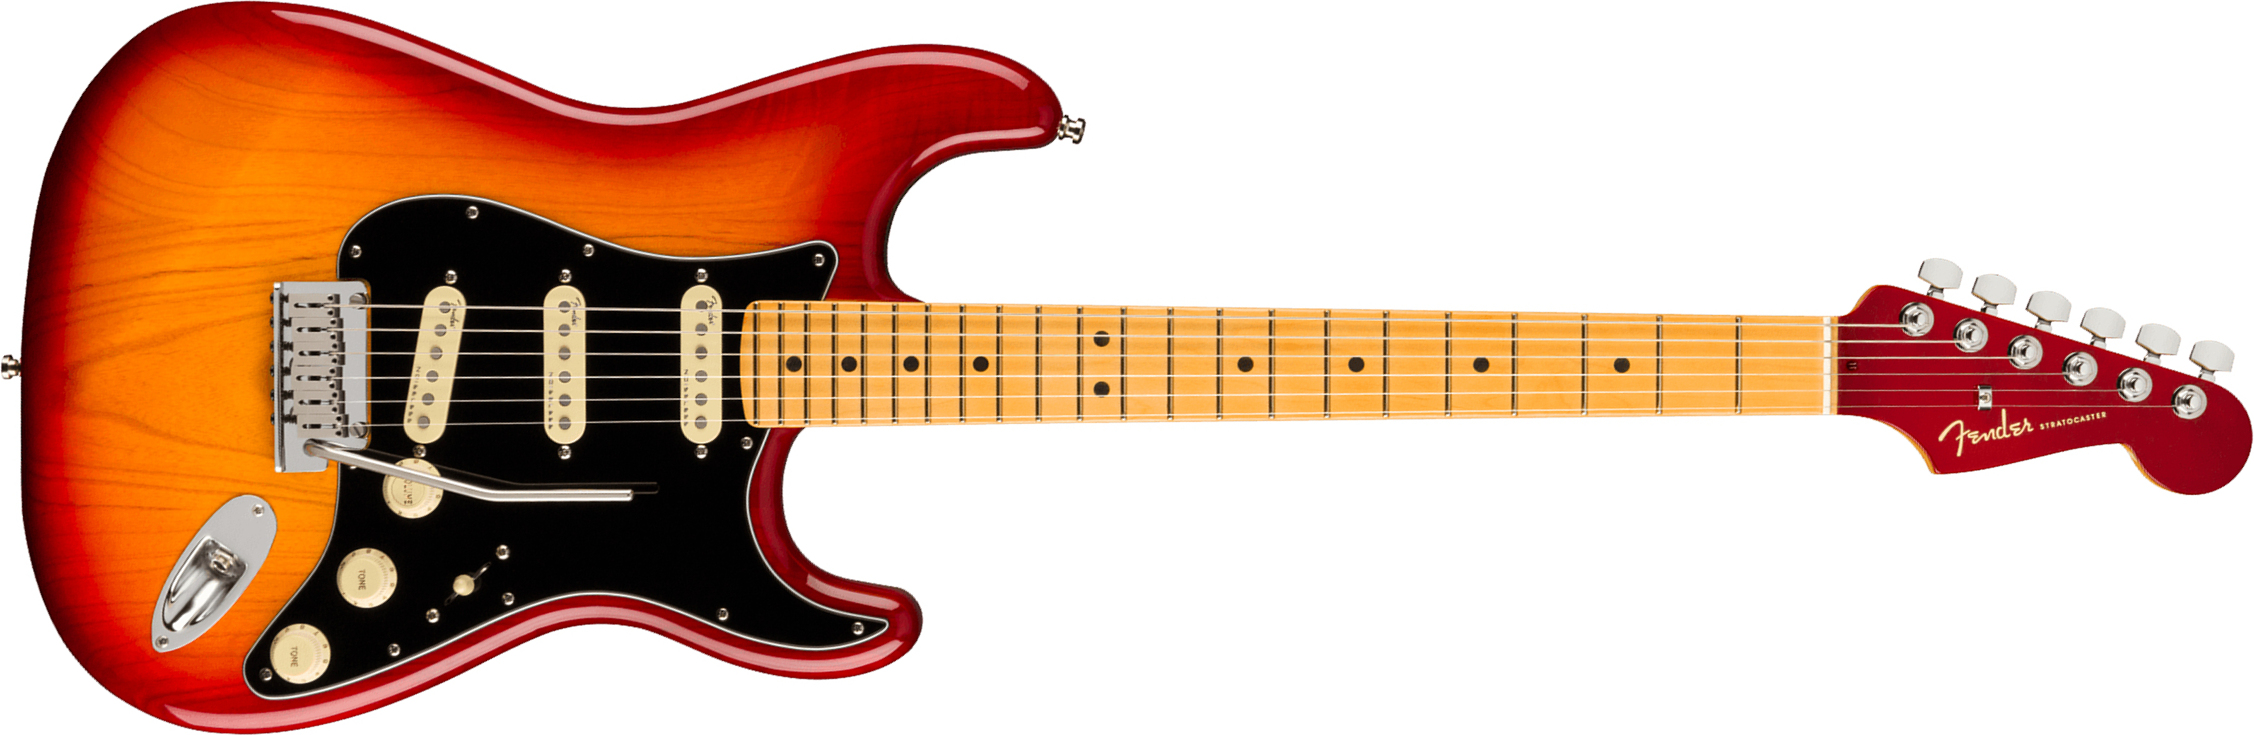 Fender Strat American Ultra Luxe Usa Mn +etui - Plasma Red Burst - Str shape electric guitar - Main picture